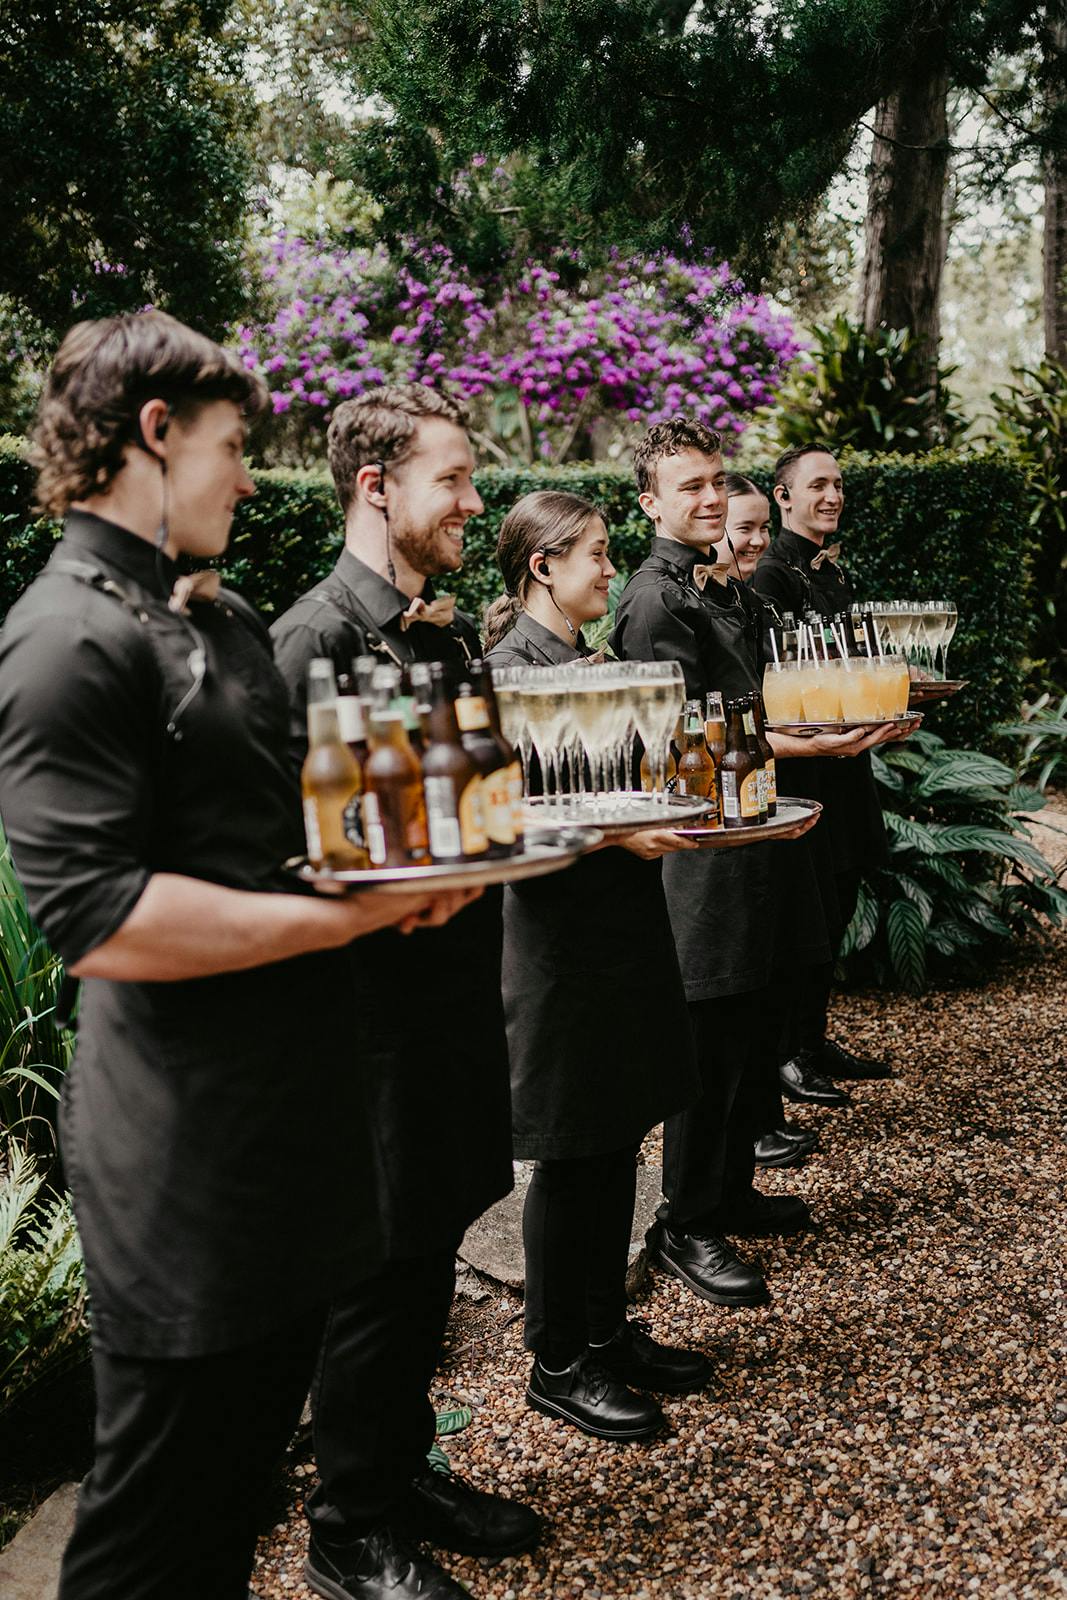 Waitstaff holding trays of drinks